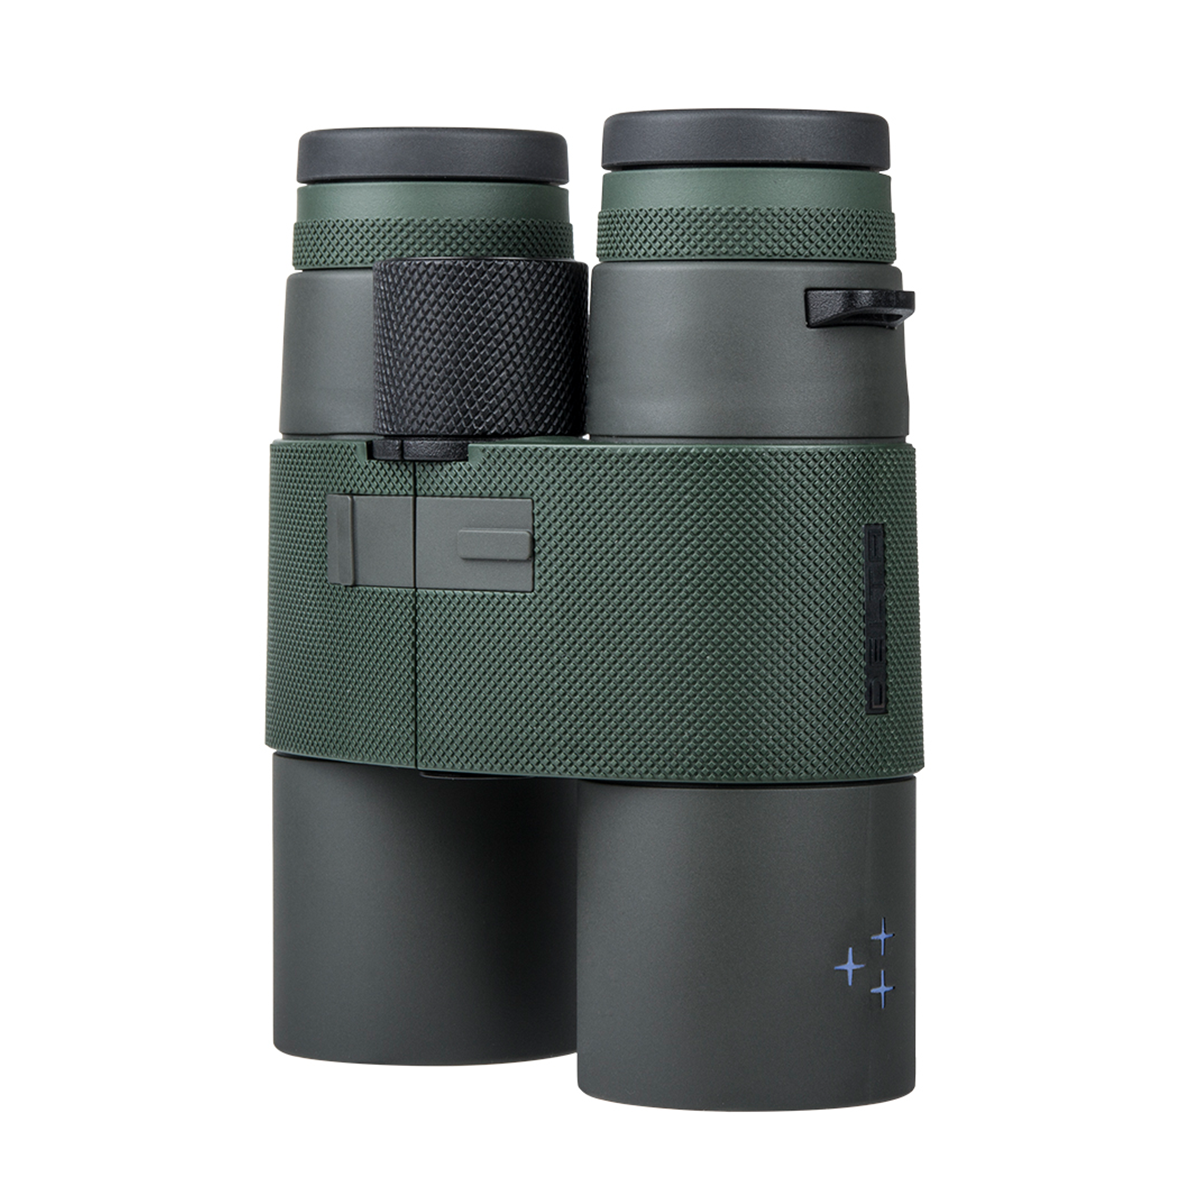 Titanium HD Binoculars